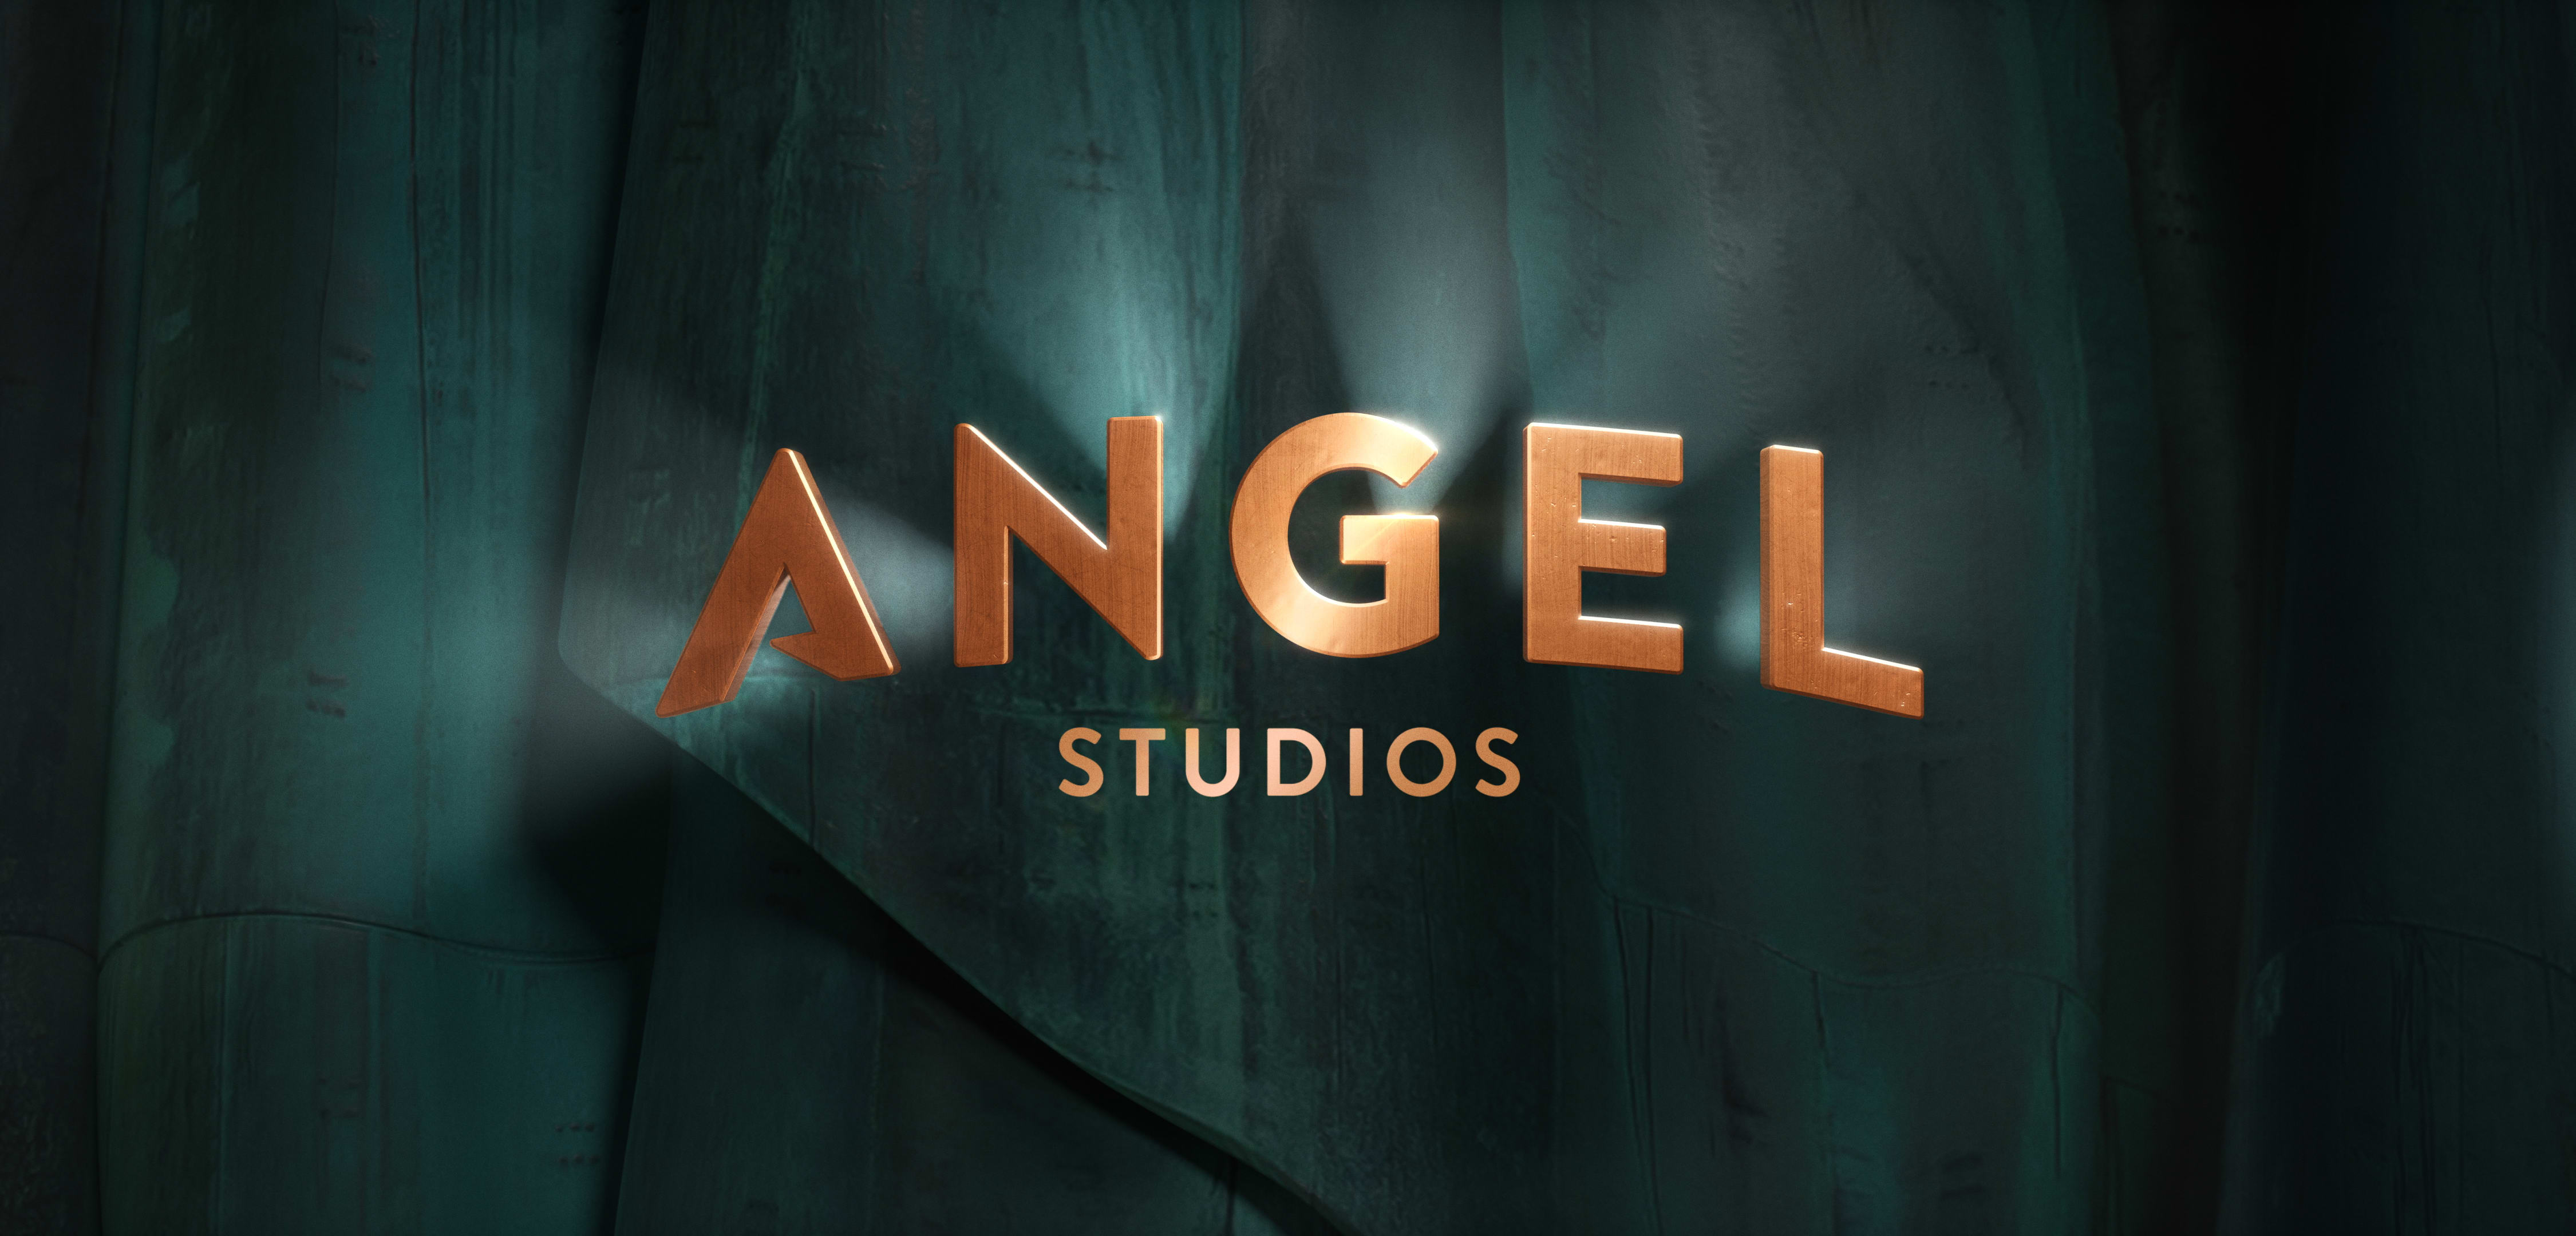 Angel Studios: Stream Free, Original Shows for the Whole Family